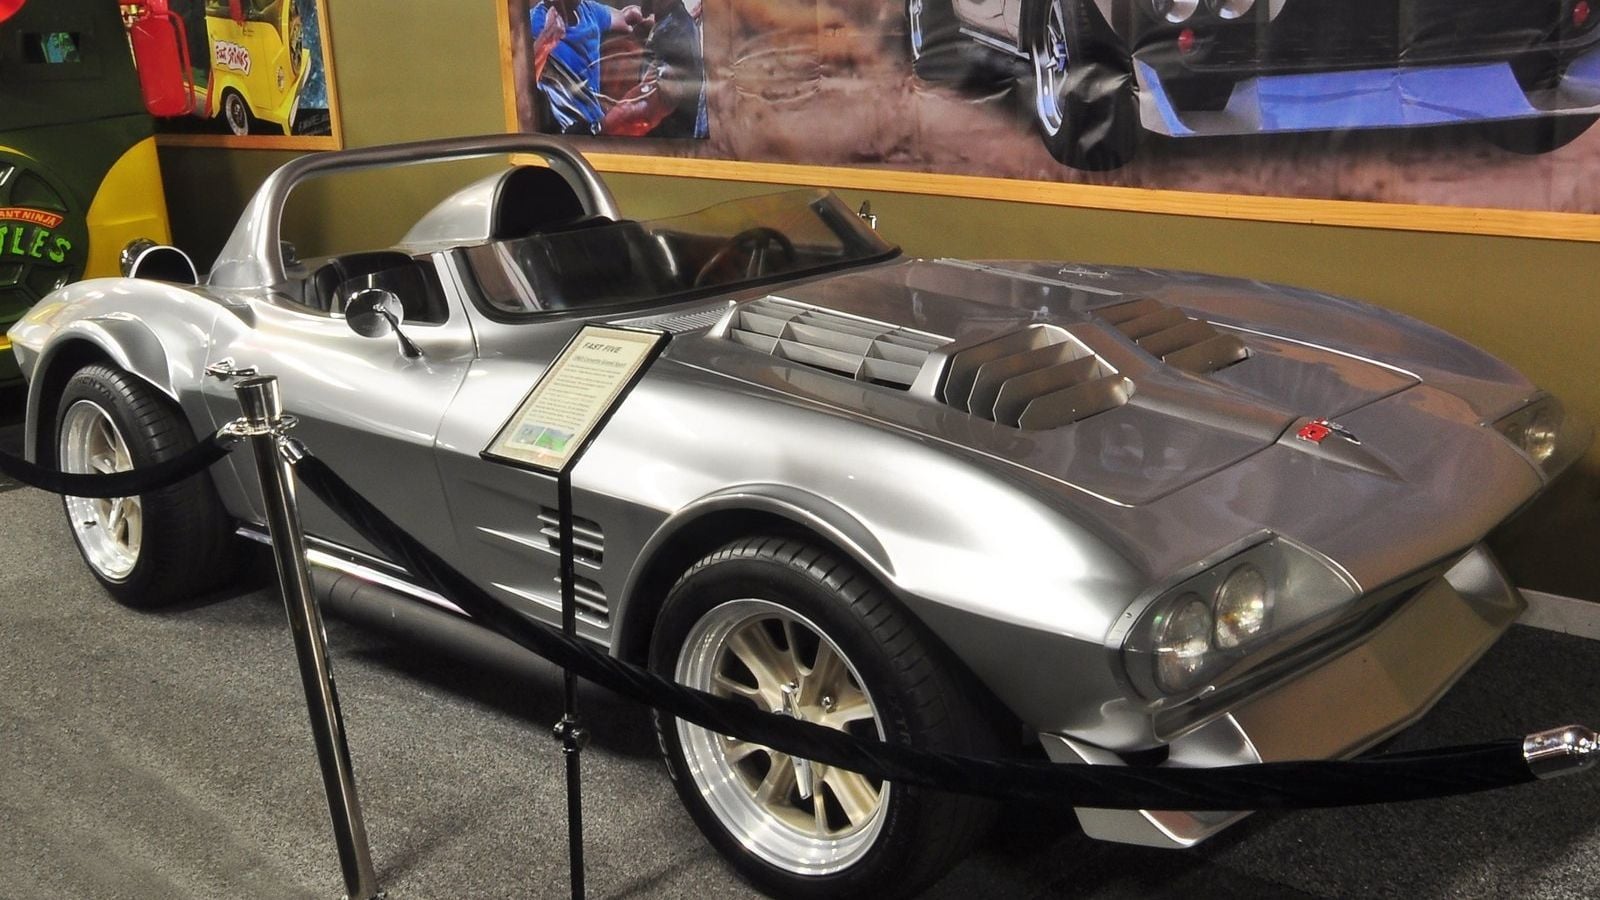 Corvette Makes the Cast of Fast 8 - National Corvette Museum